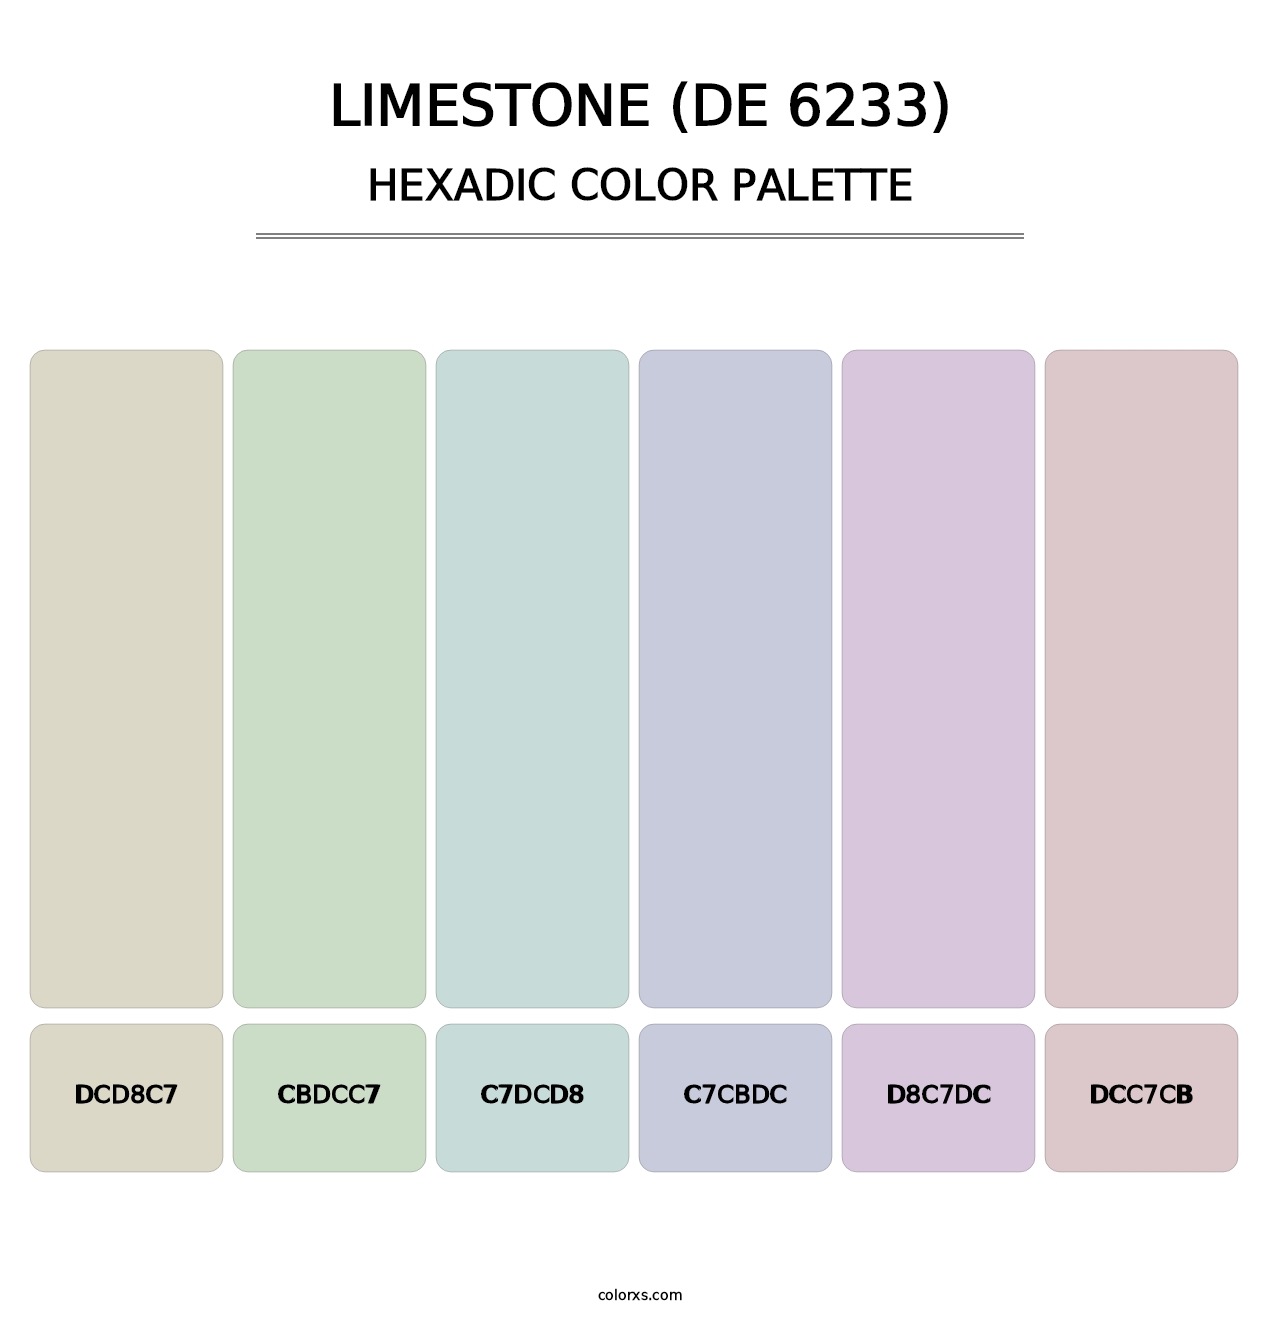 Limestone (DE 6233) - Hexadic Color Palette